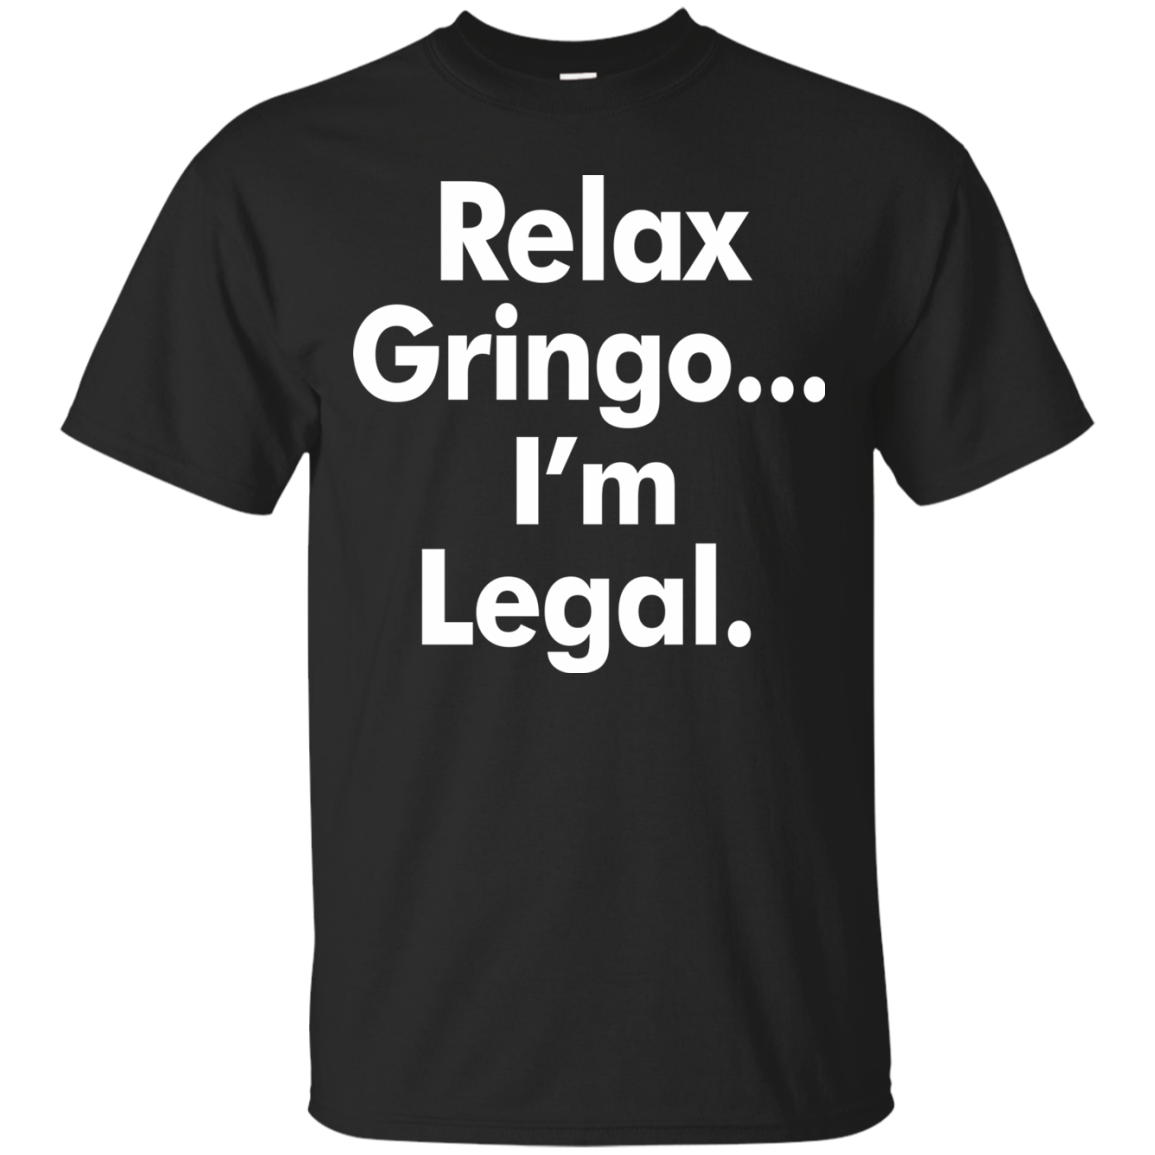 Relax gringo i'm legal shirt, sweater, tank top